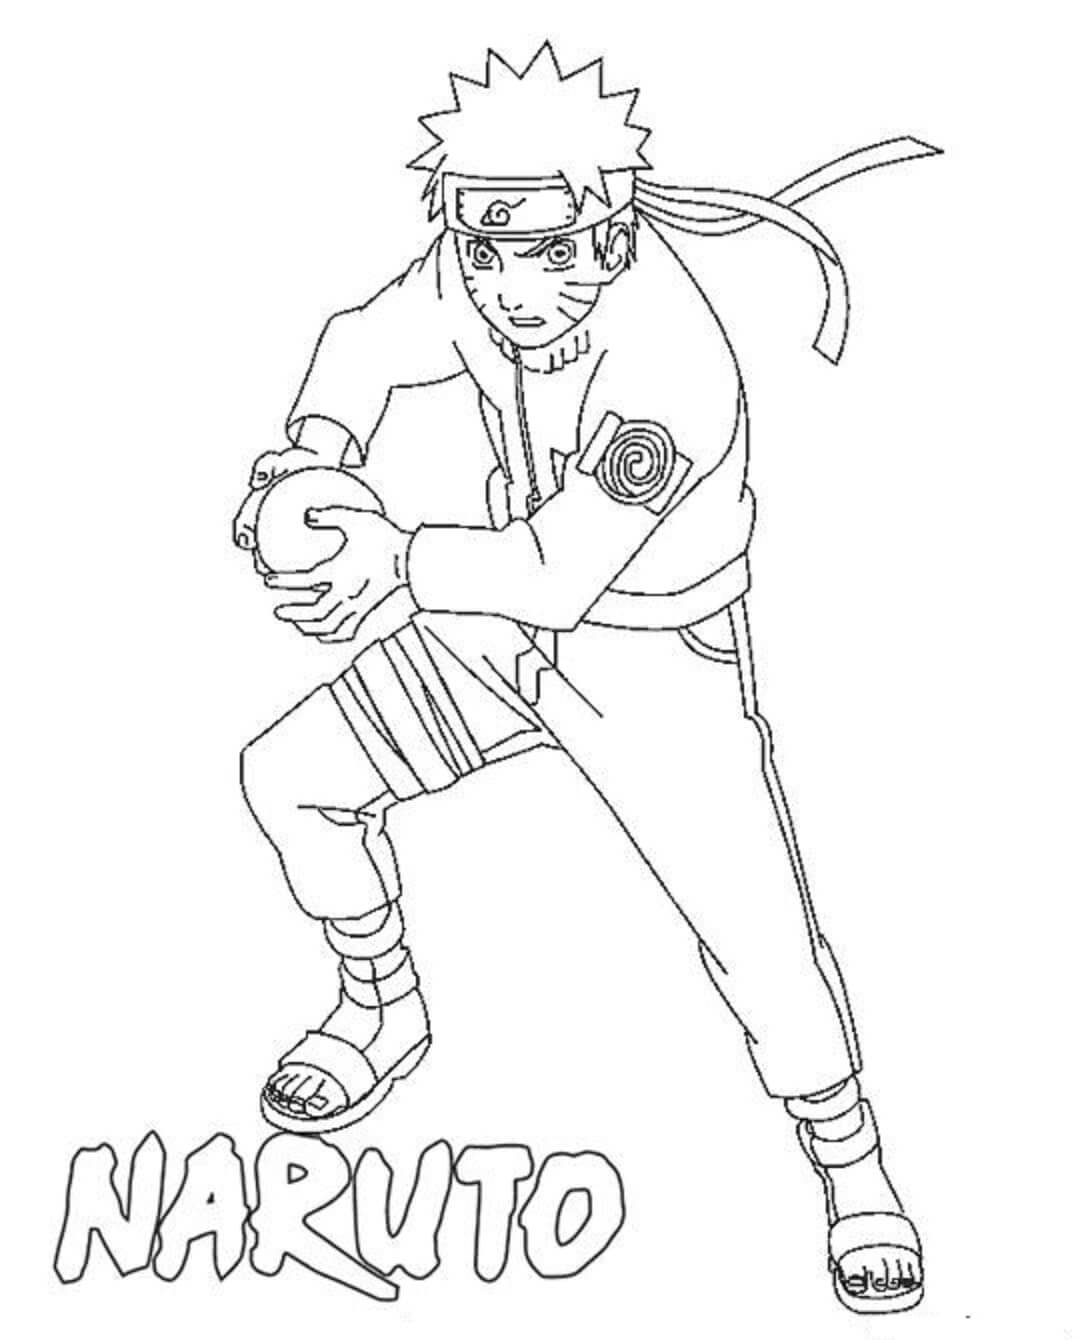 Power Naruto Rasengan Tegninger til Farvelægning